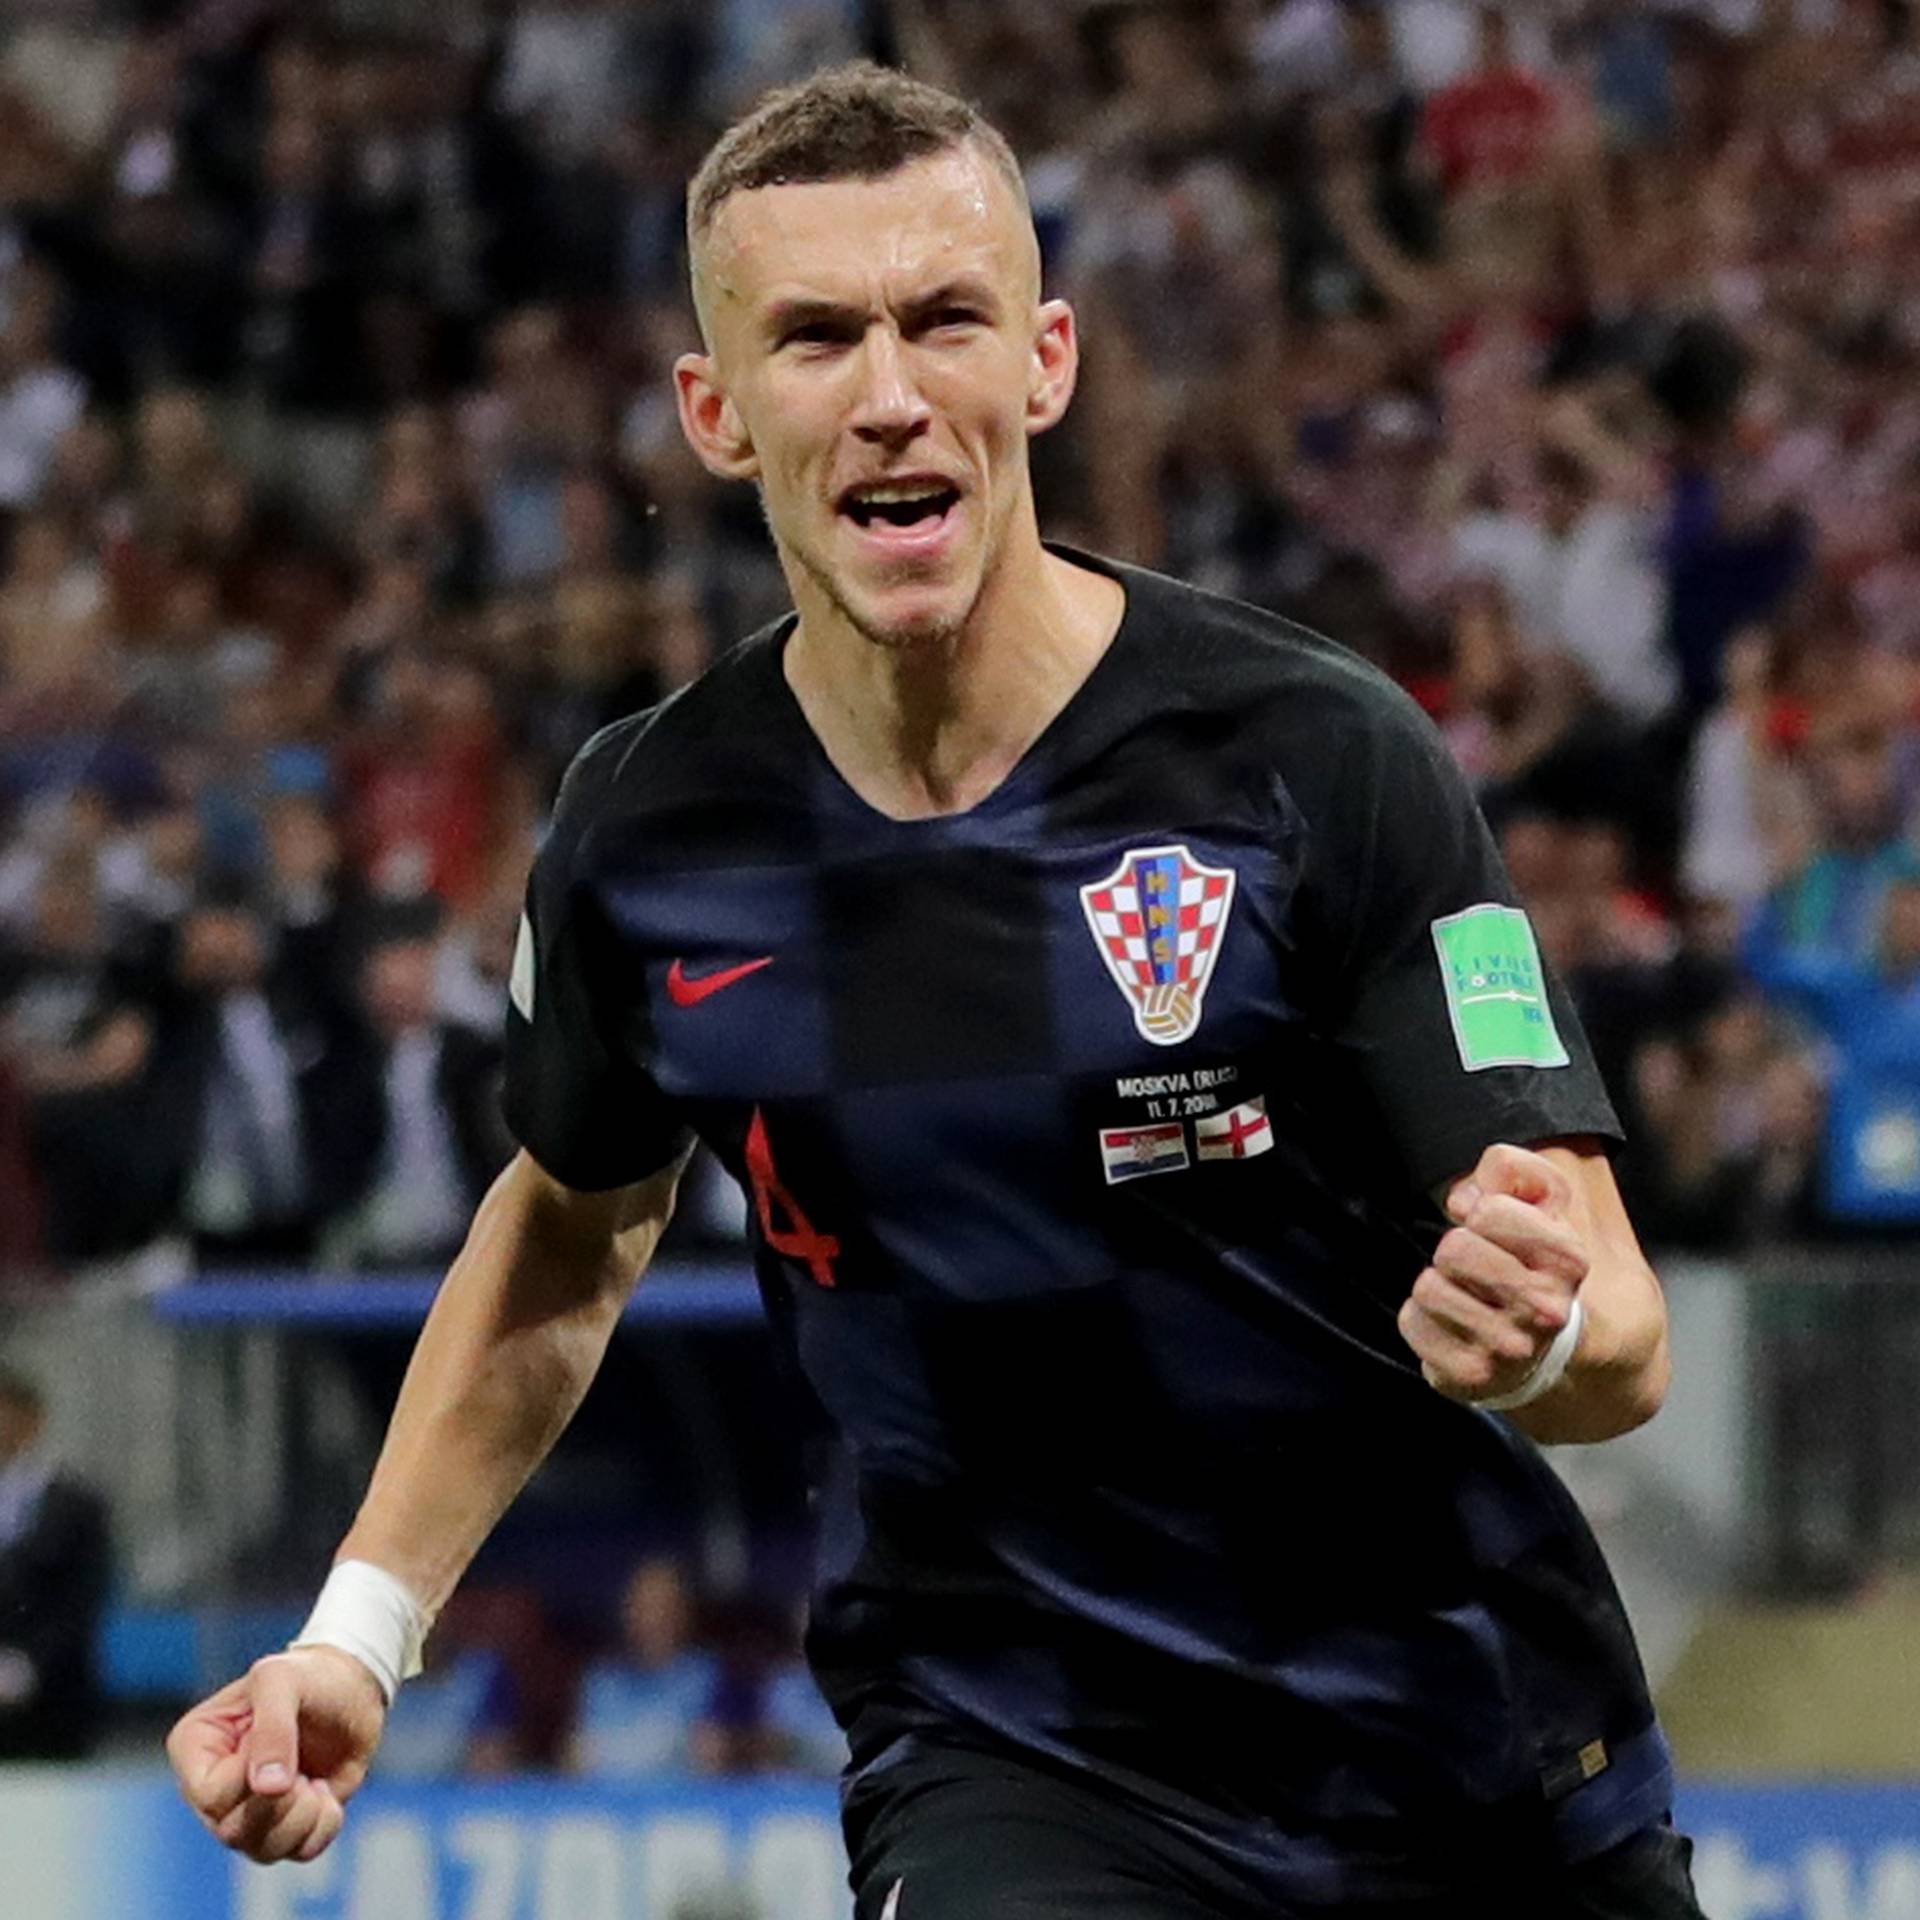 FIFA World Cup 2018 - Croatia vs England